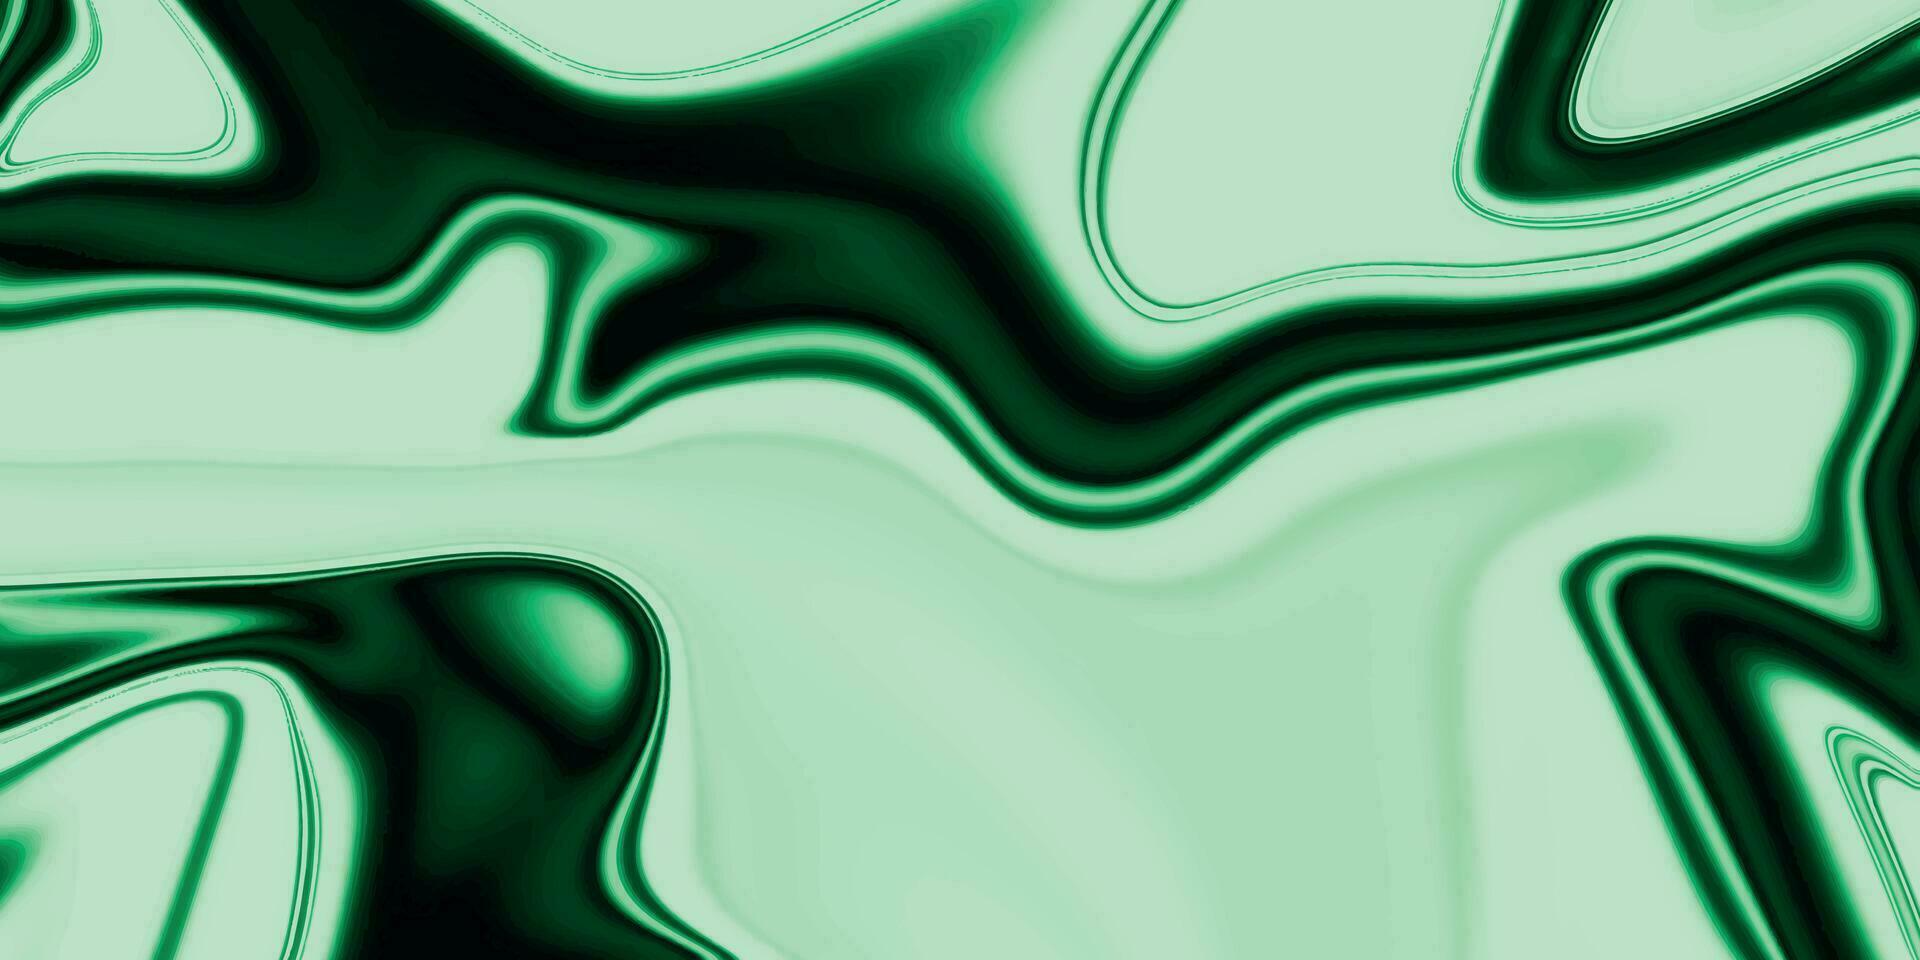 Preto e verde fluido ondulado digital abstrato arte. liquidificado efeito fundo. abstrato mármore sem costura textura vetor